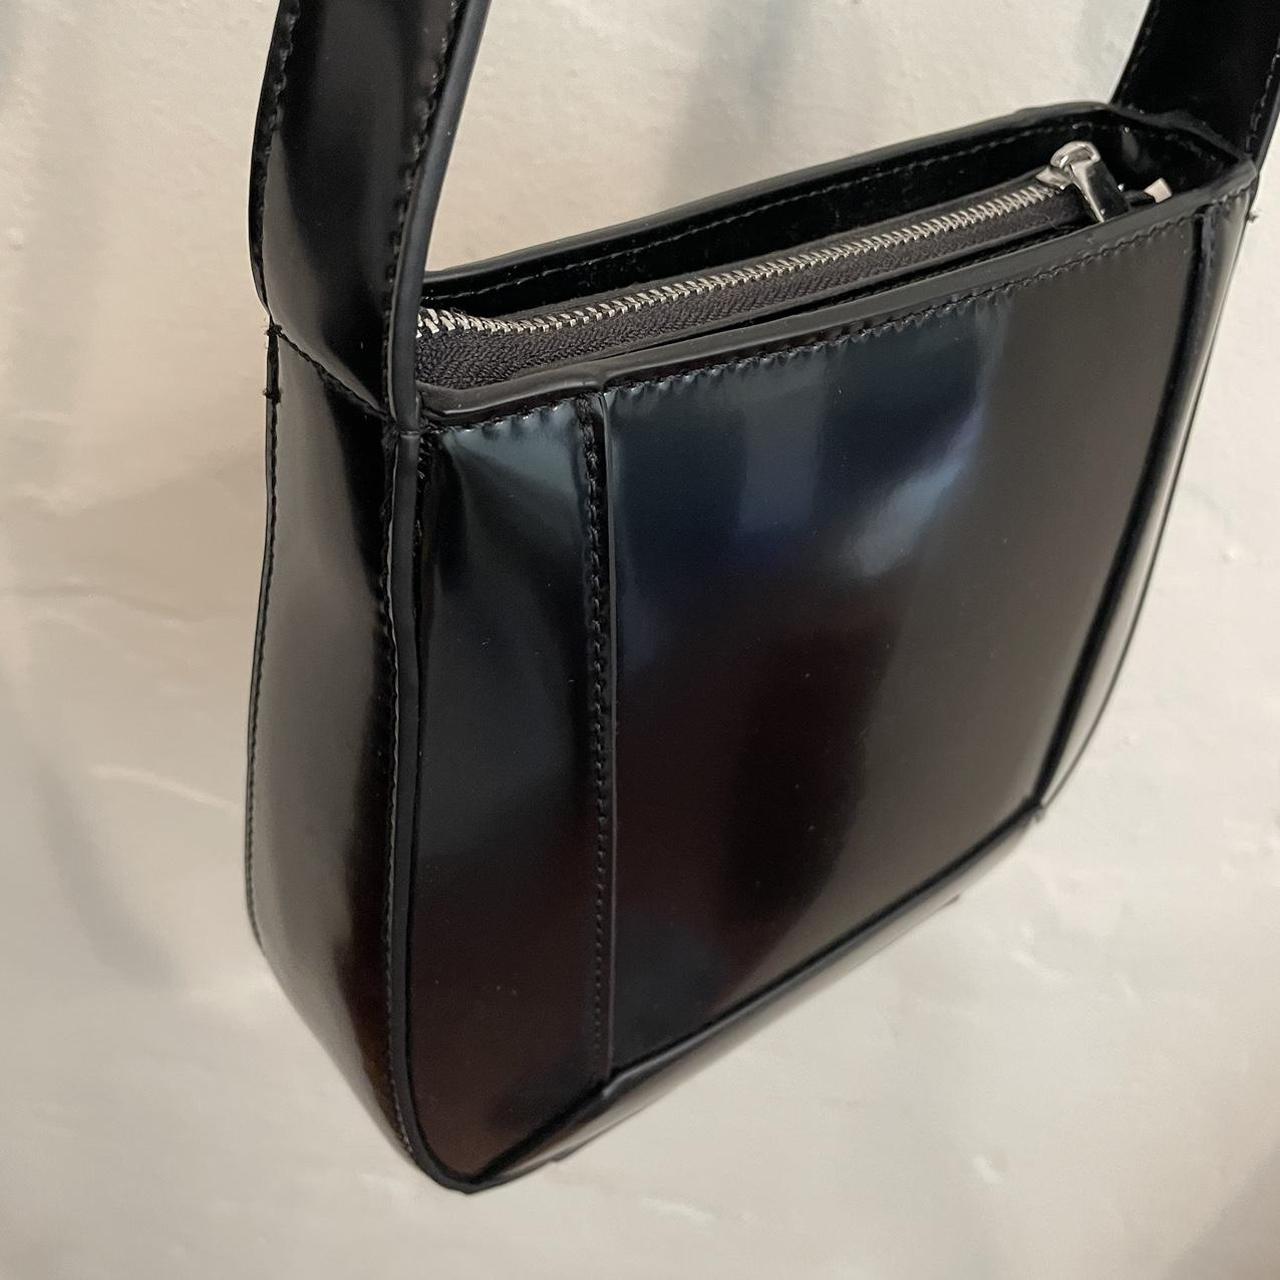 Brand new shiny black purse from Zara, never used it. - Depop